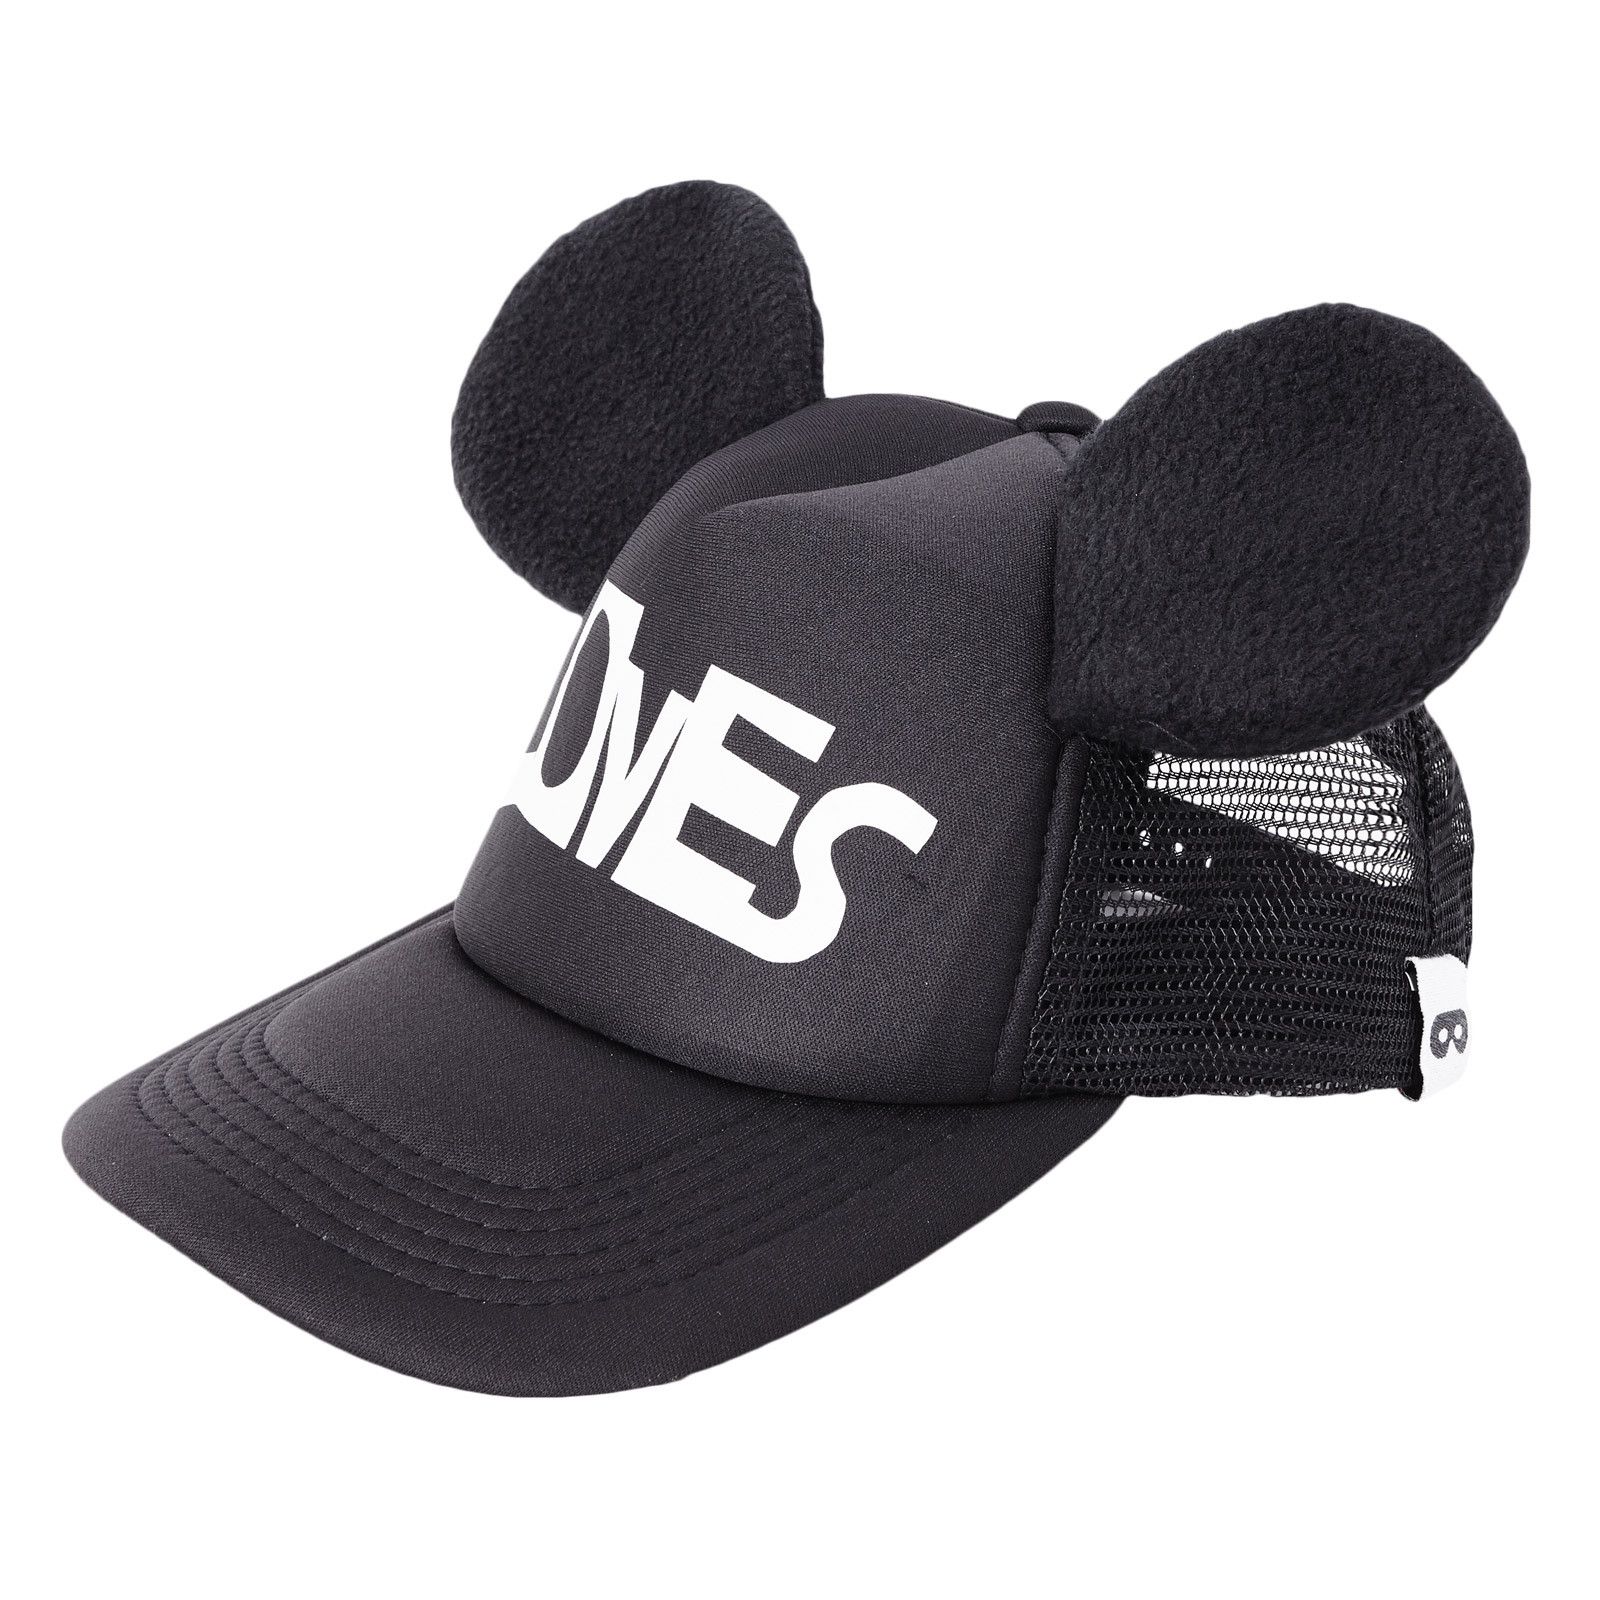 Baby Black Mouse Cap With Loves Logo - CÉMAROSE | Children's Fashion Store - 1